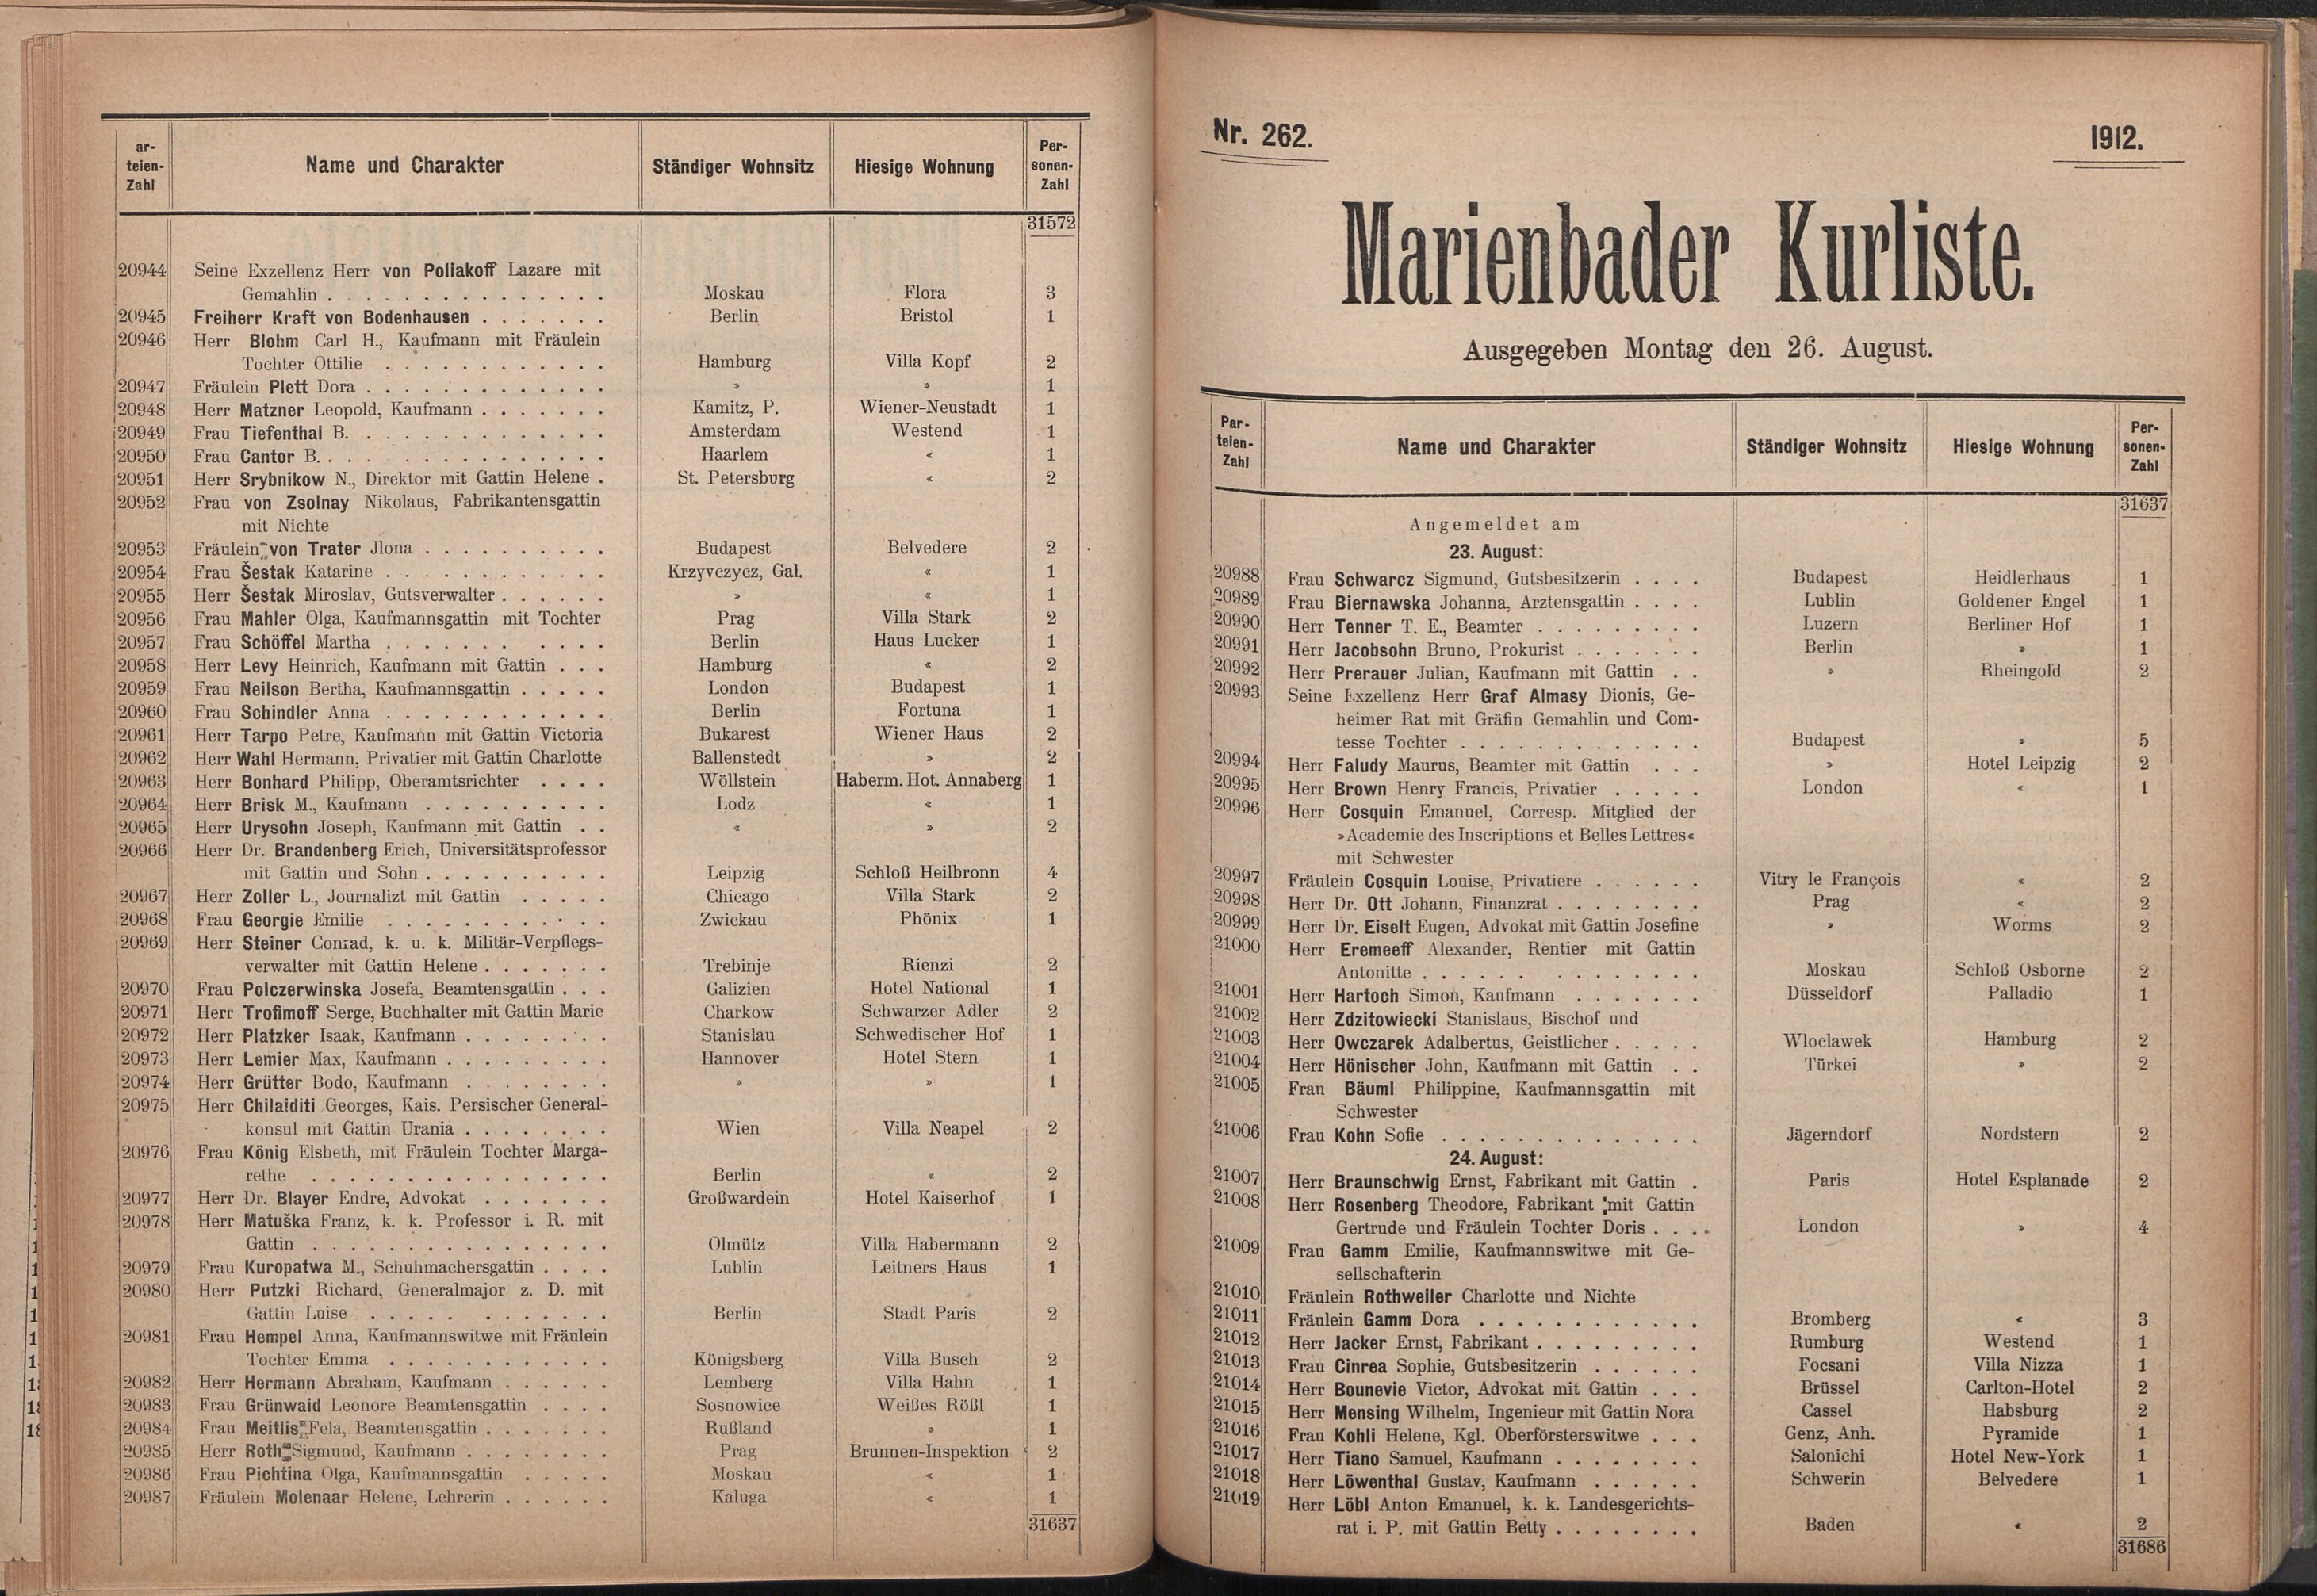 278. soap-ch_knihovna_marienbader-kurliste-1912_2780